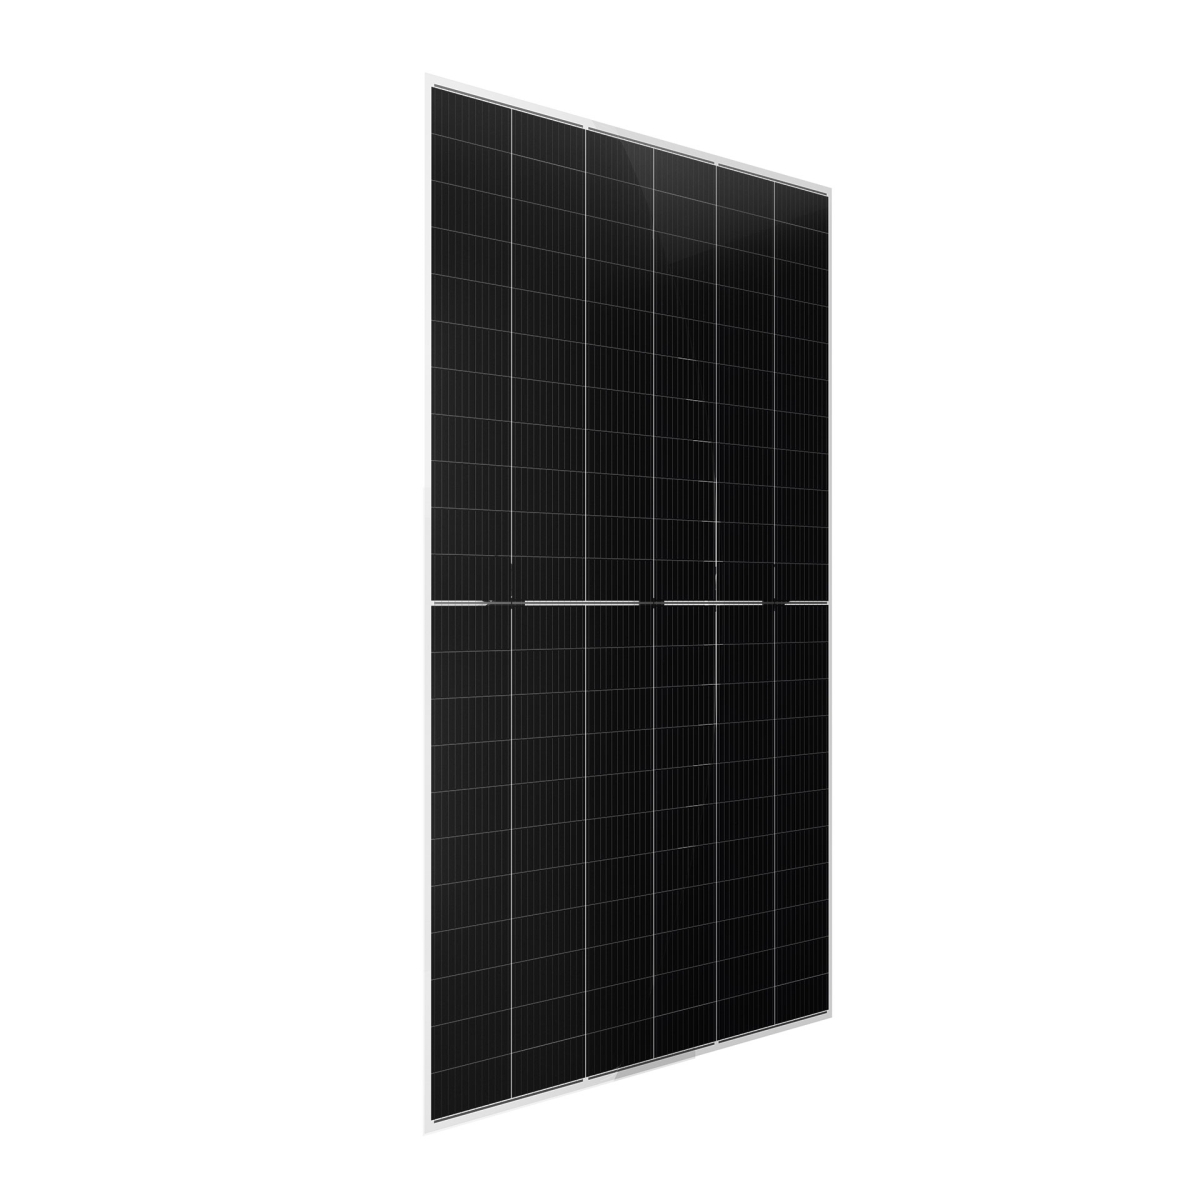 CW Enerji 650Wp M12 132PM Cells Bifacial G2G Half-Cut MB Solar Panel